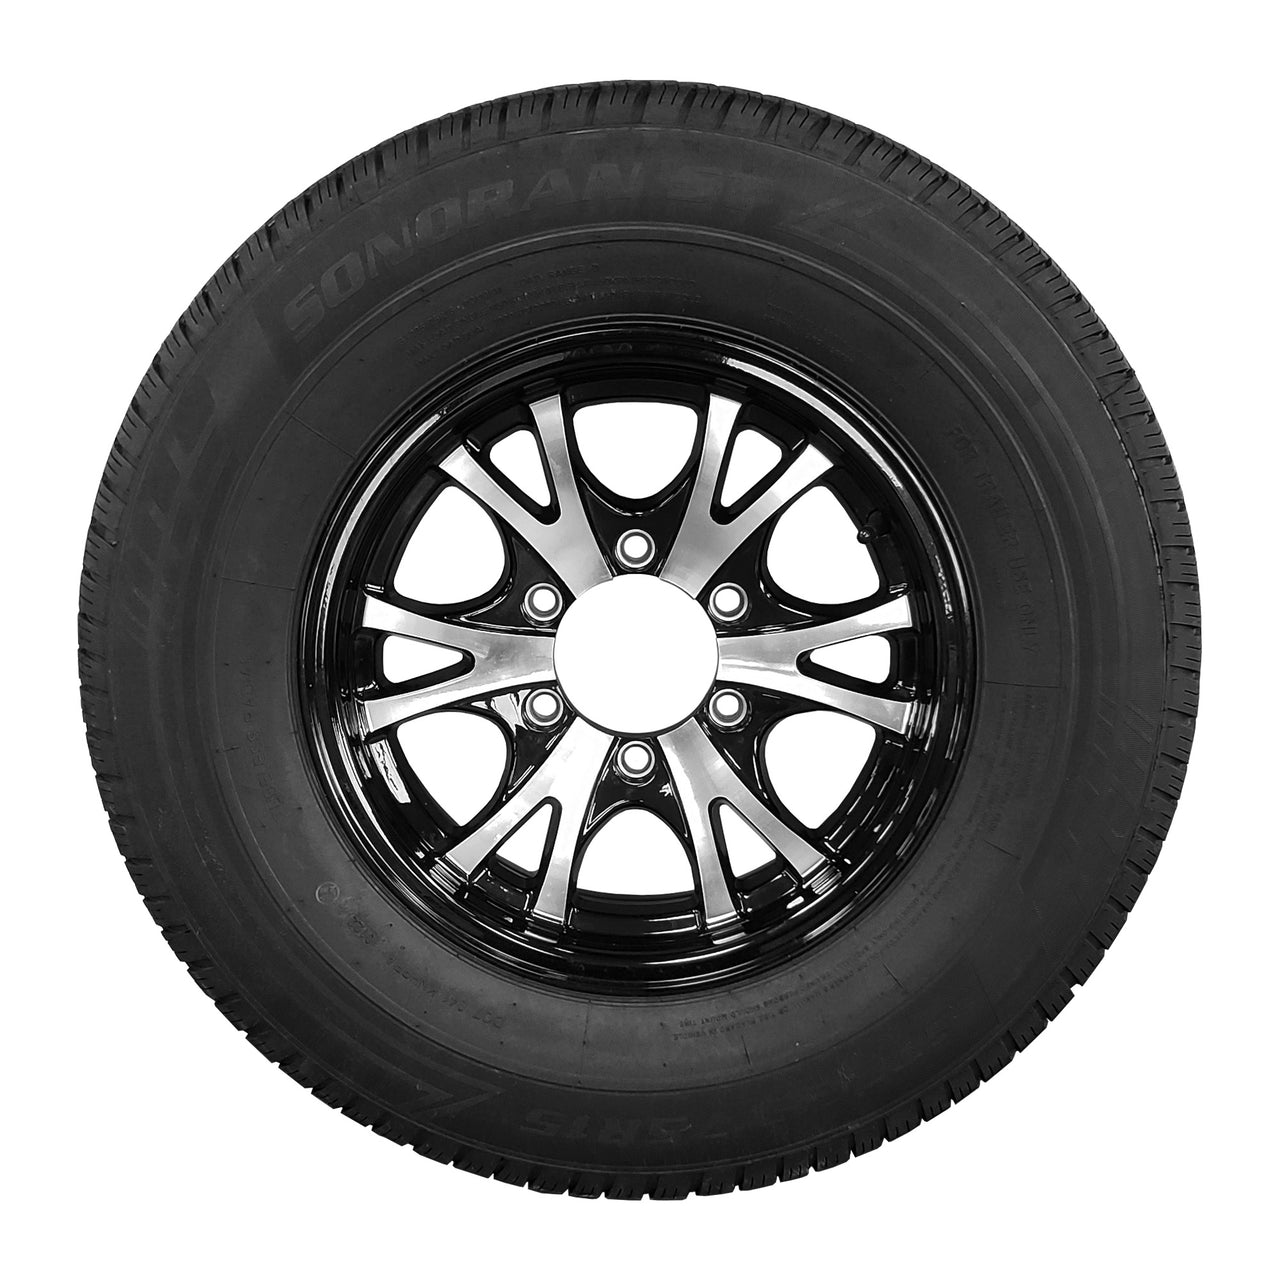 ST225/75R15 Trailer Tire w/ 15" Aluminum Wheel - 6 on 5-1/2"